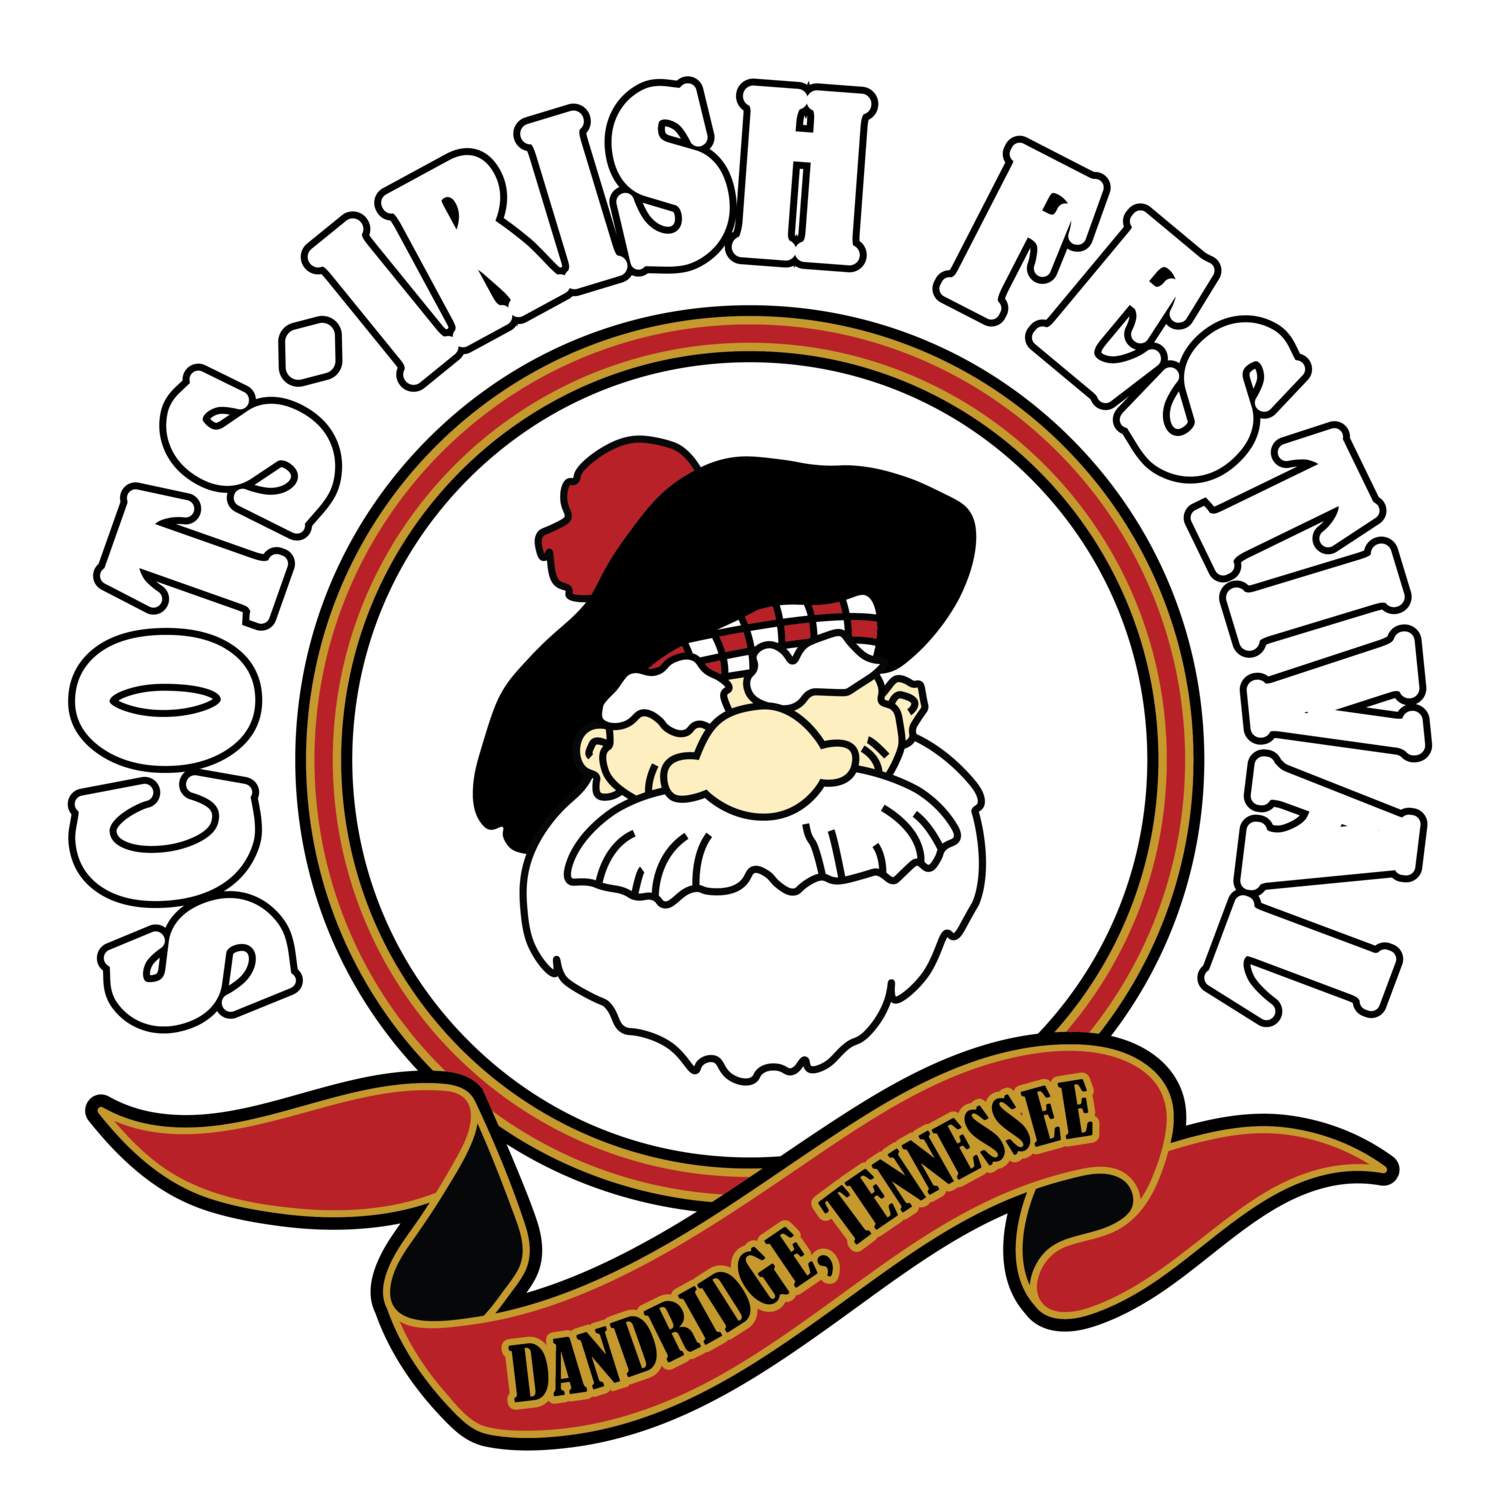 Scots-Irish Festival